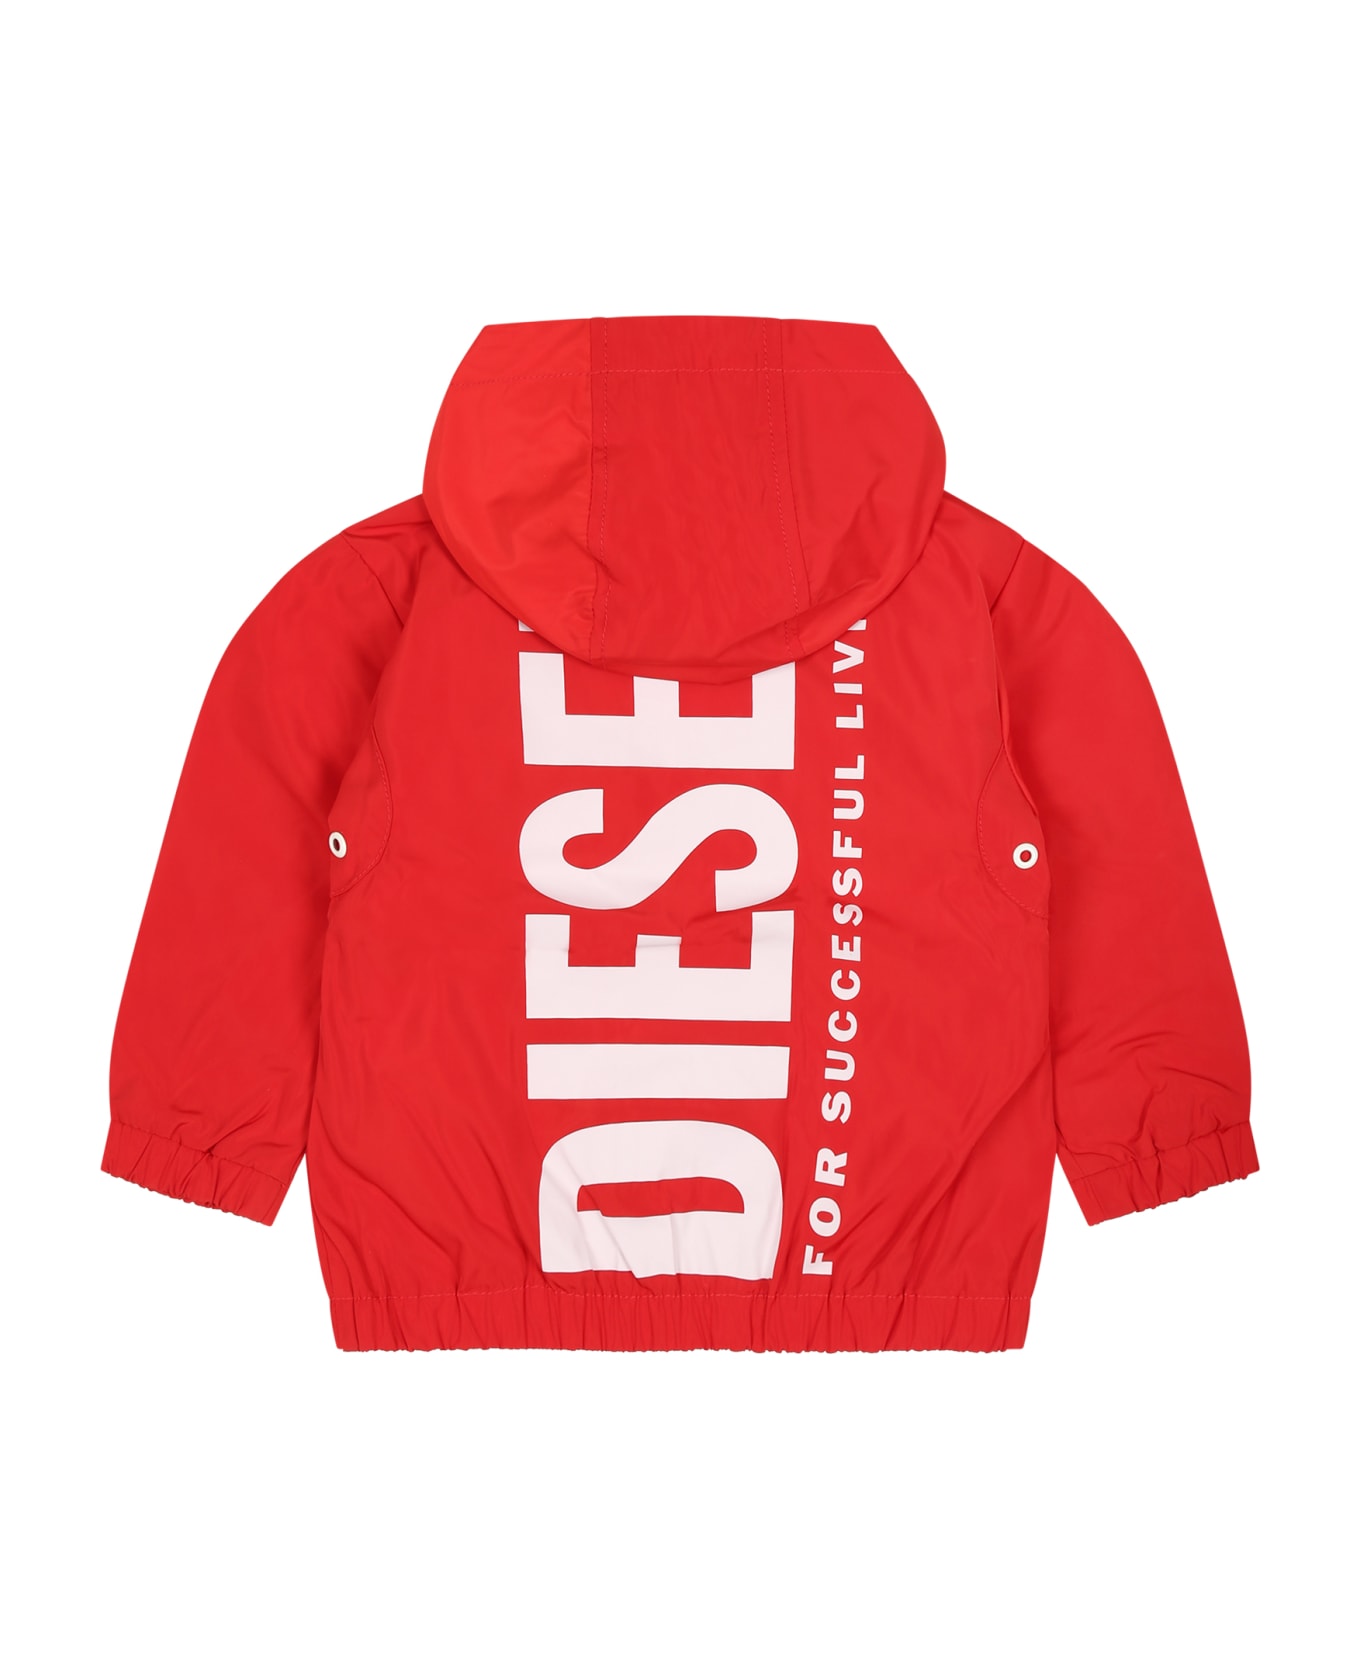 Diesel Red Wind Jacket For Baby Kids - Red